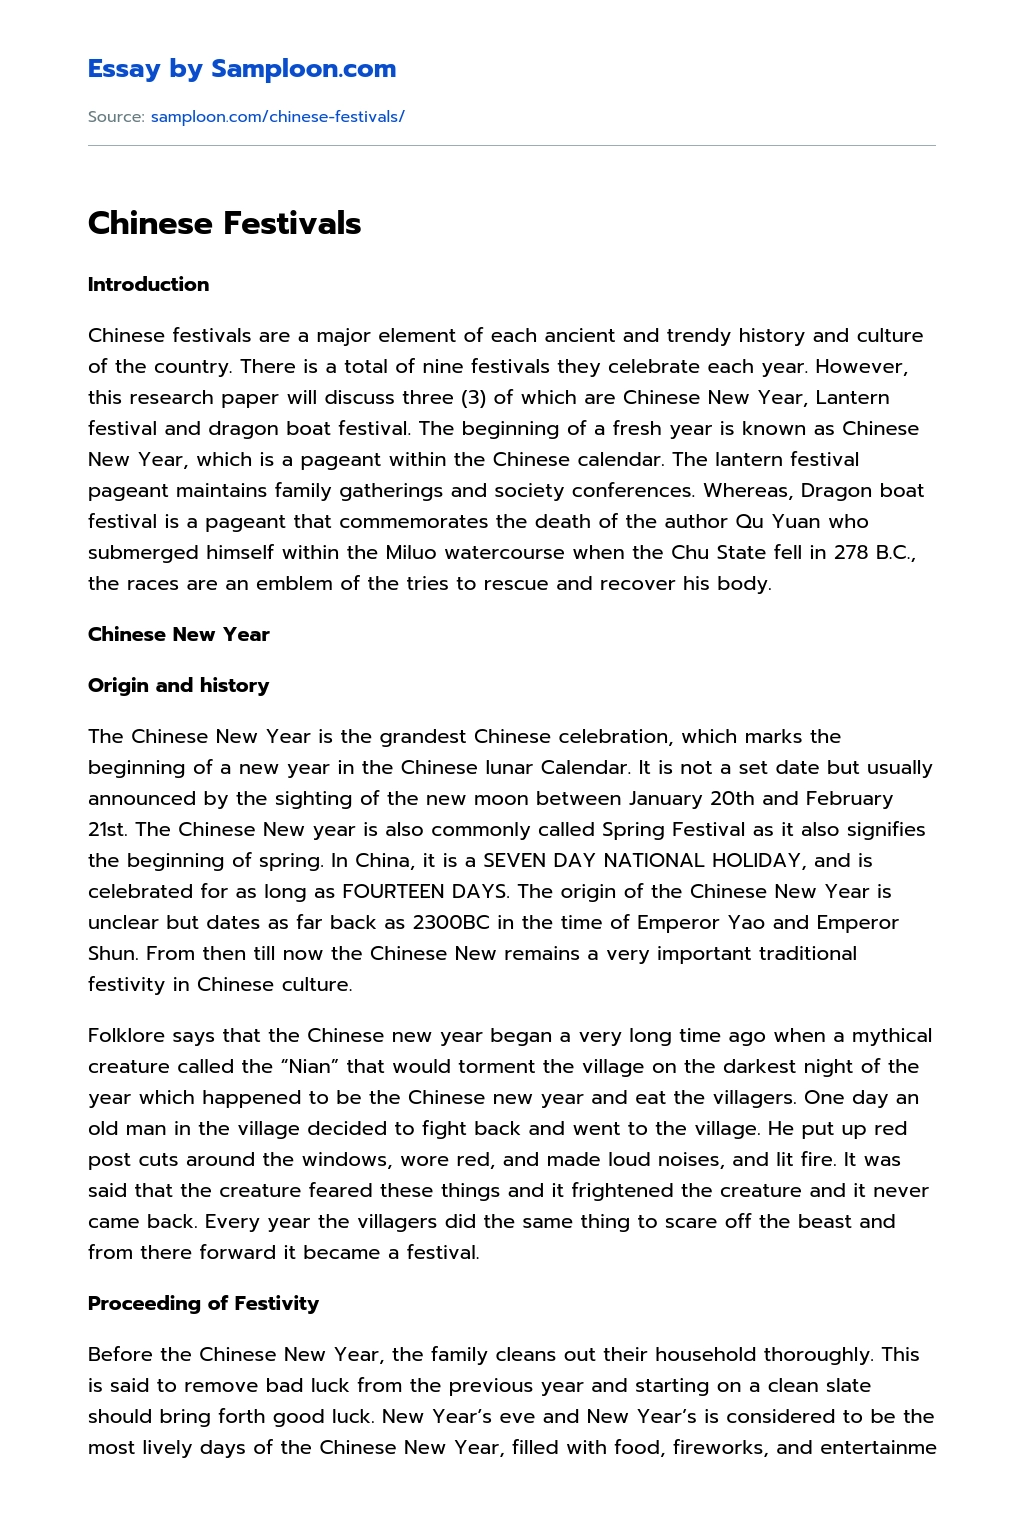 Chinese Festivals essay